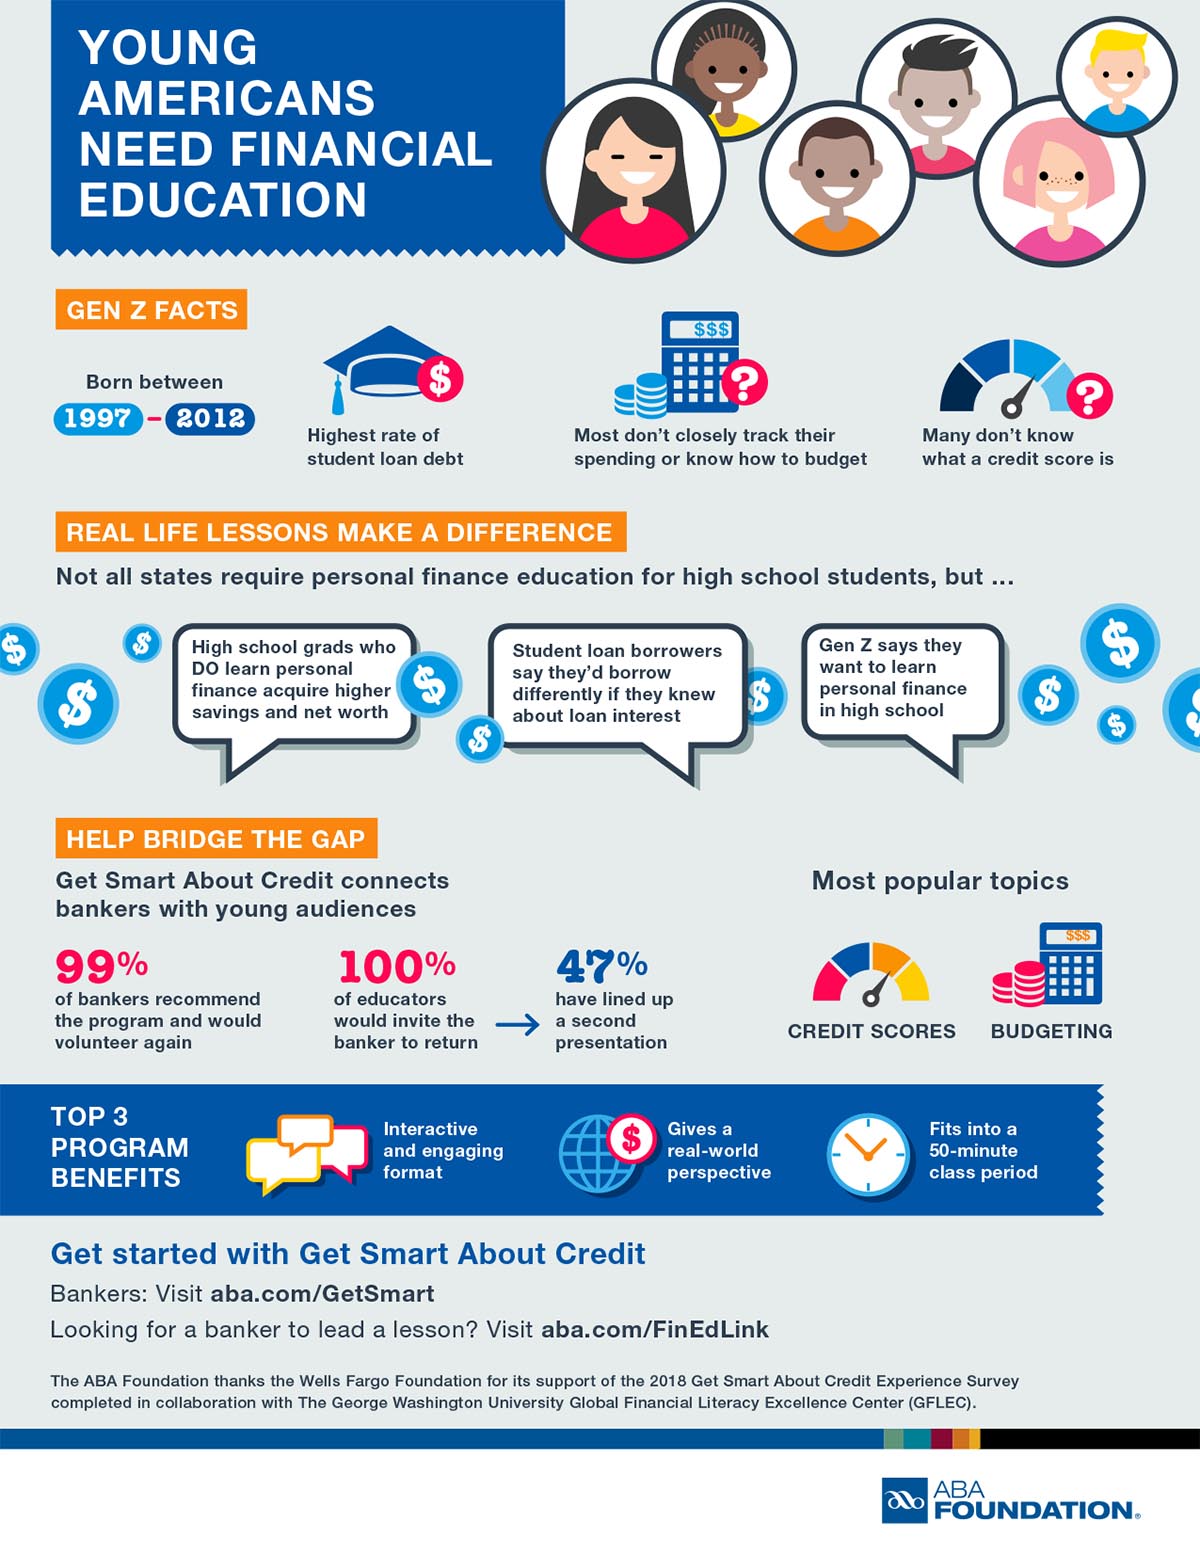 Get Smart About Credit Program Benefits